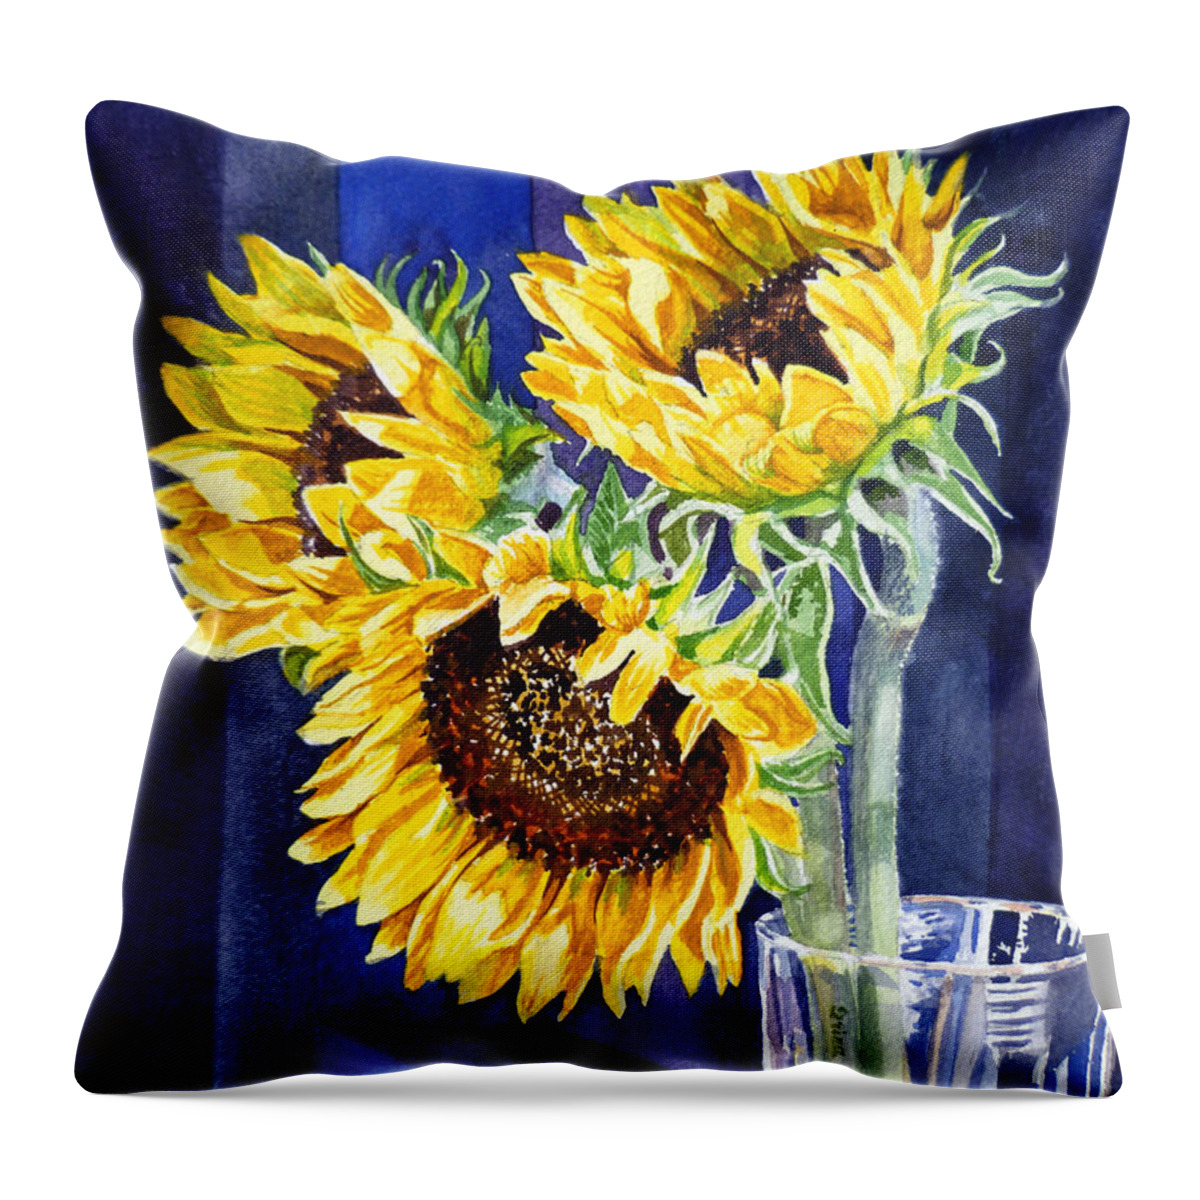 Sunflowers Throw Pillow featuring the painting Sunflowers by Irina Sztukowski